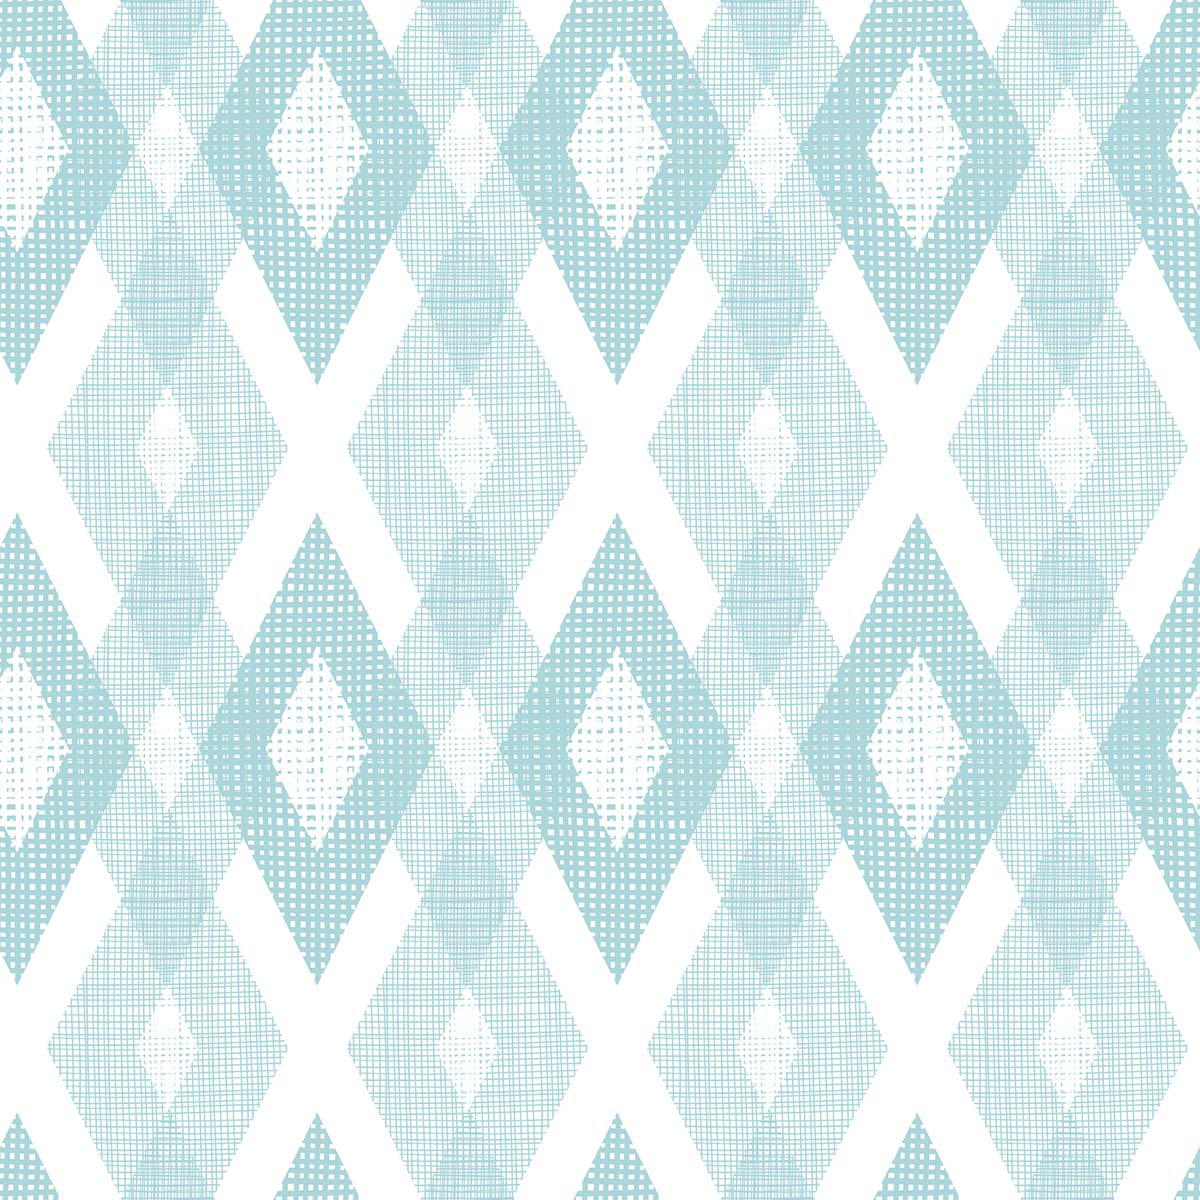 A blue and white diamond pattern